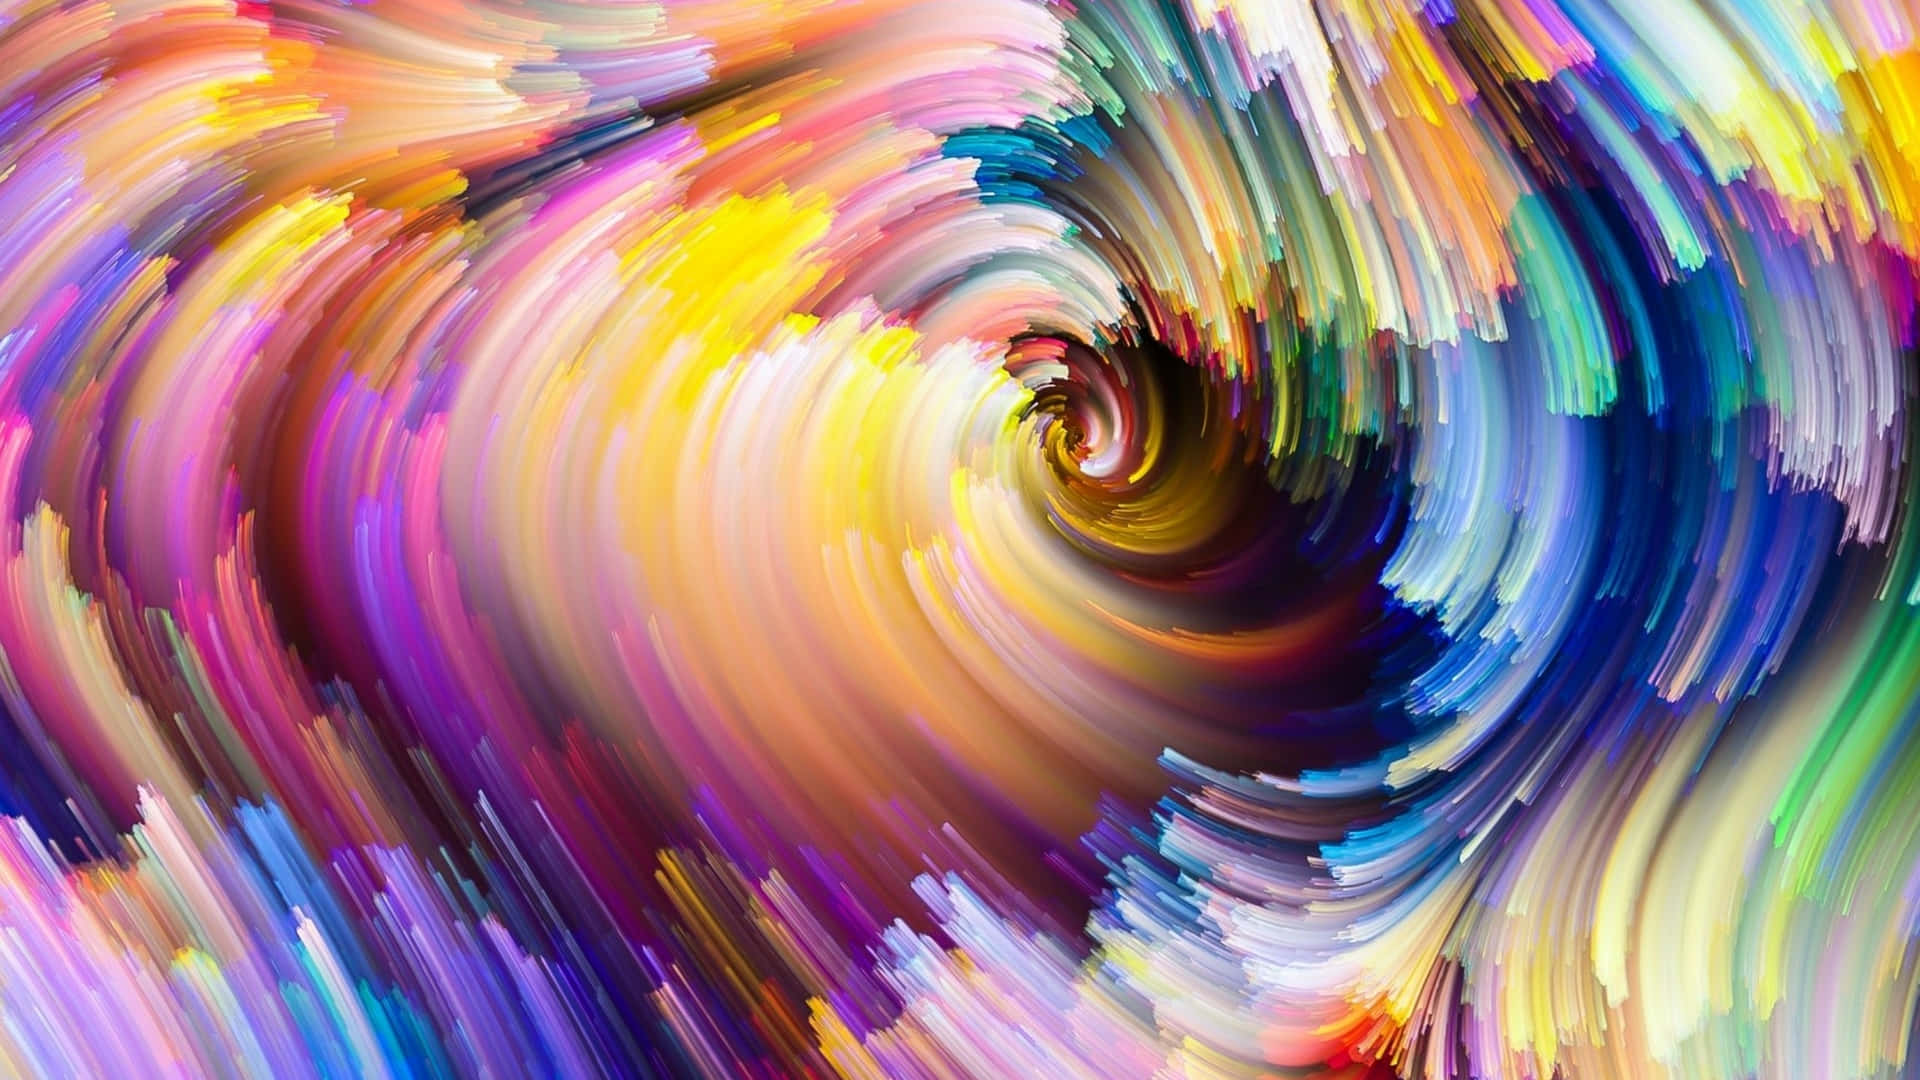 Ethereal And Colorful Tsunami Swirl Digital Artwork Background